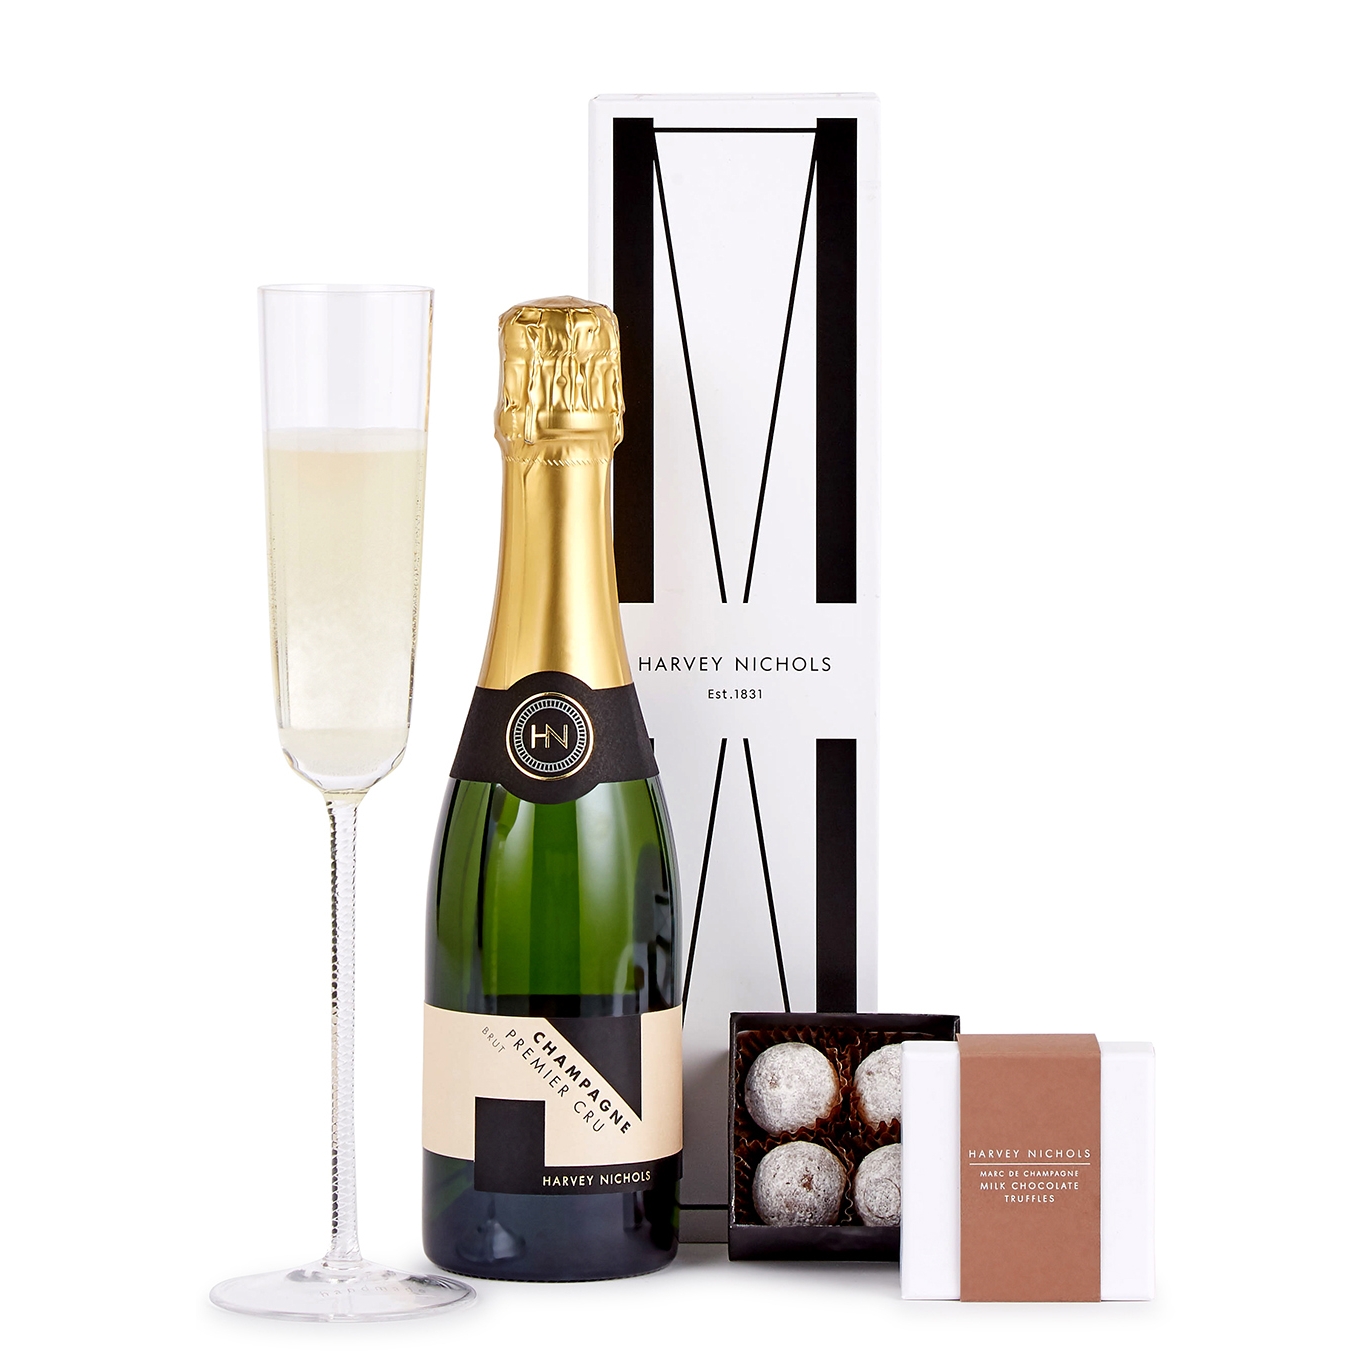 Harvey Nichols Champagne Half Bottle & Chocolate Truffle, Hamper, 40g Sparkling Wine